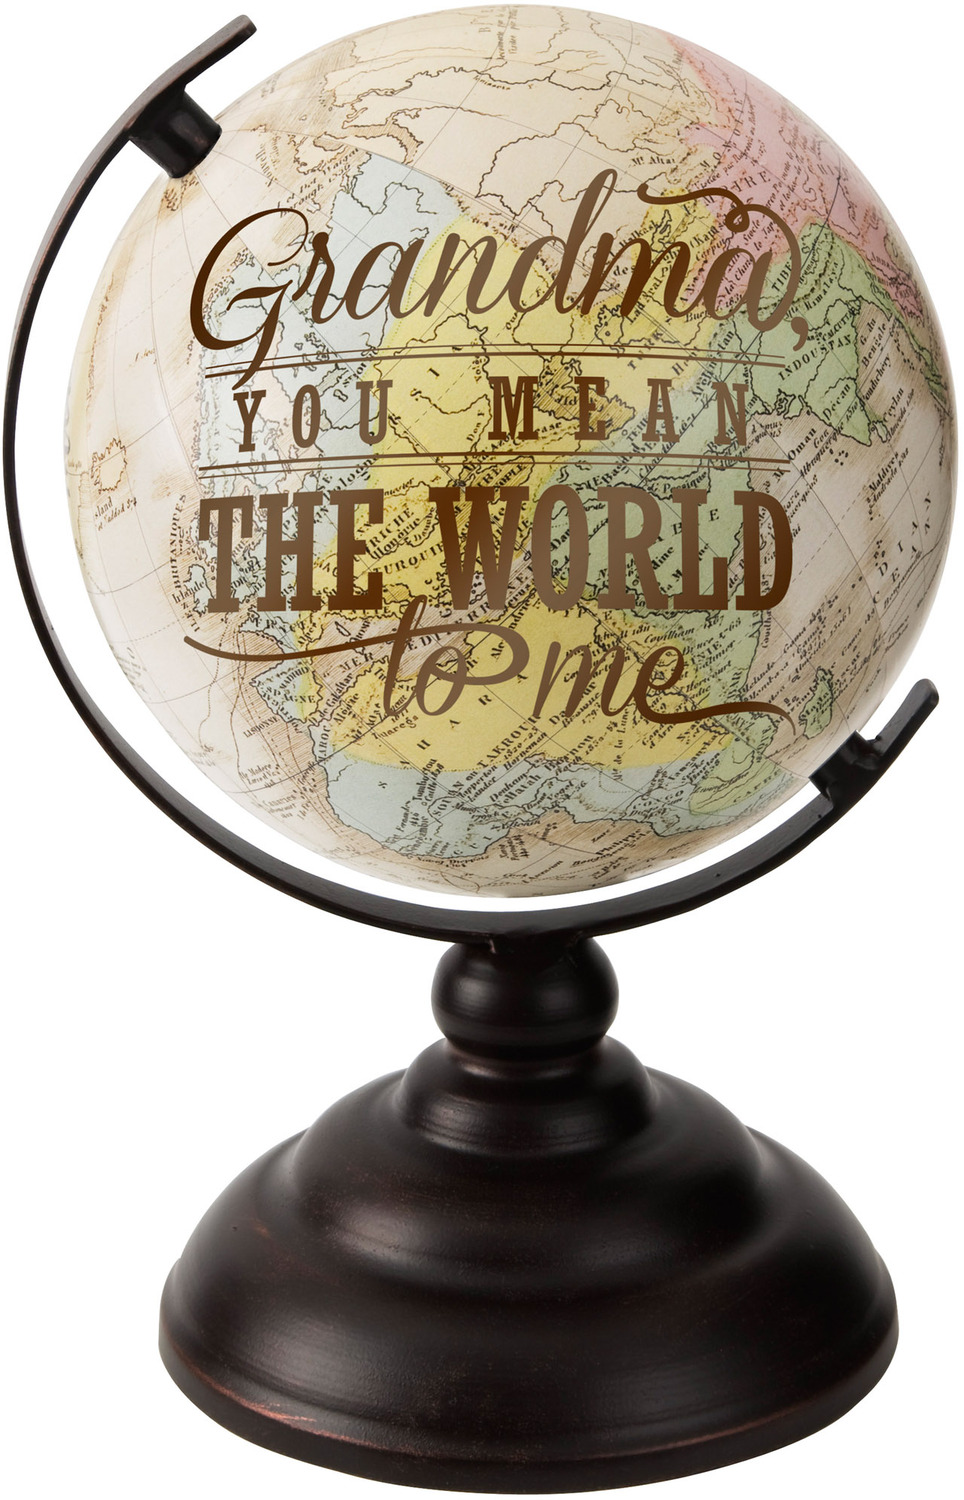 Grandma by Global Love - Grandma - 9.5" Decorative Globe